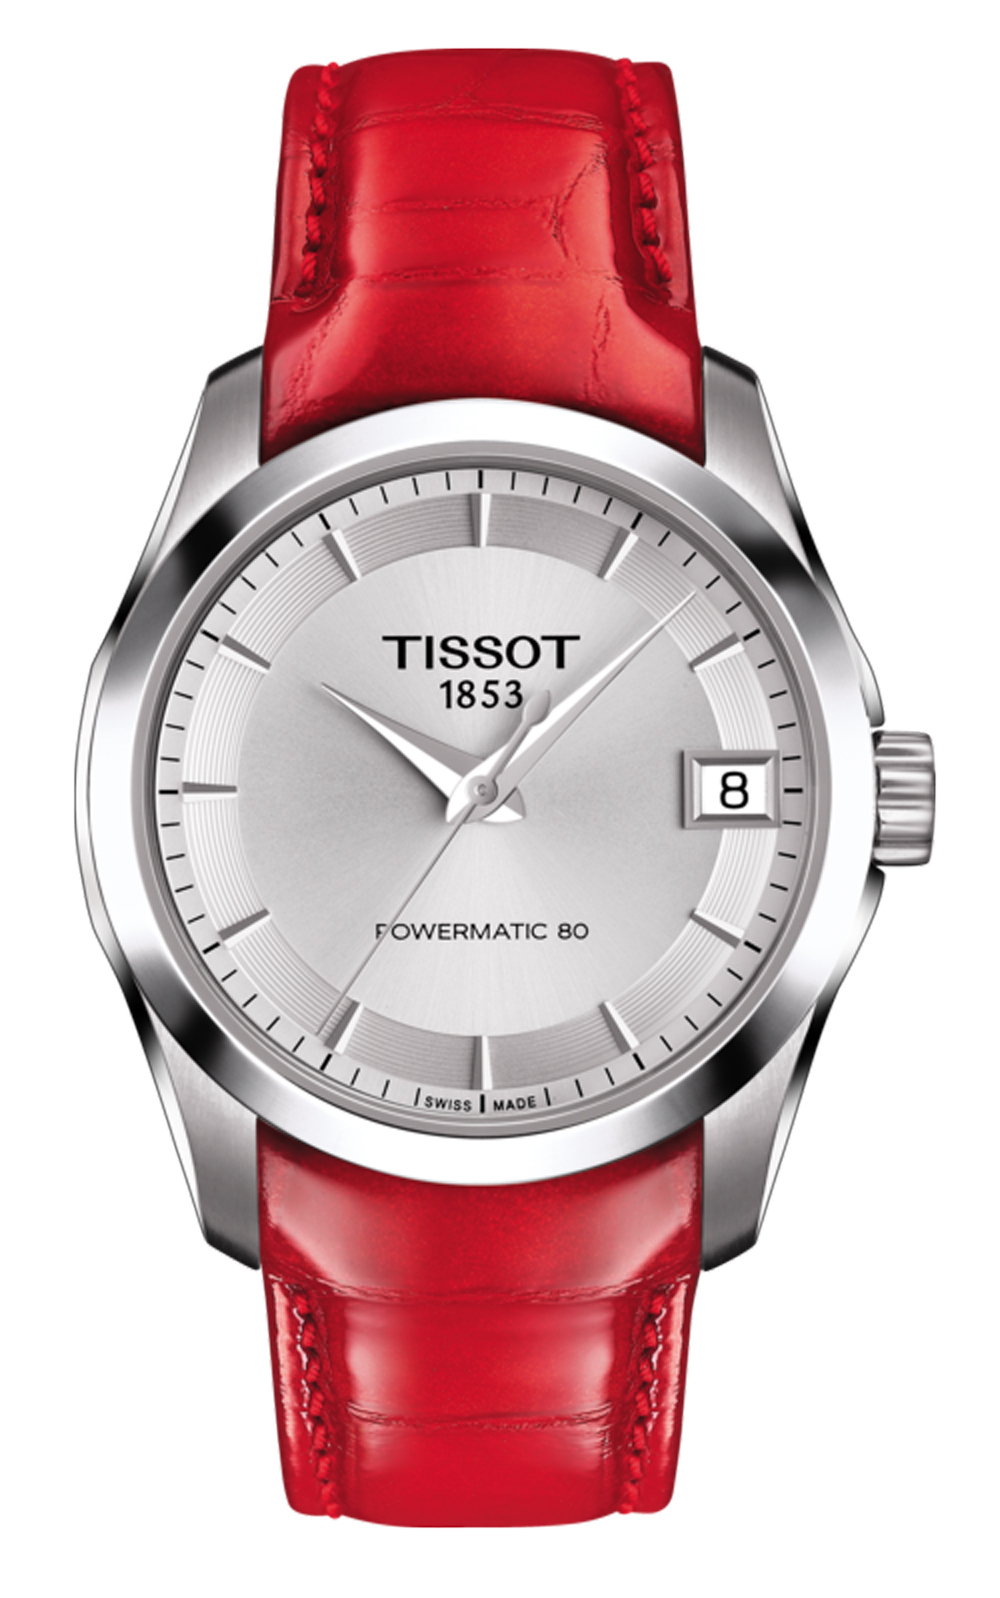 Đồng hồ nữ Tissot T035.207.16.031.01